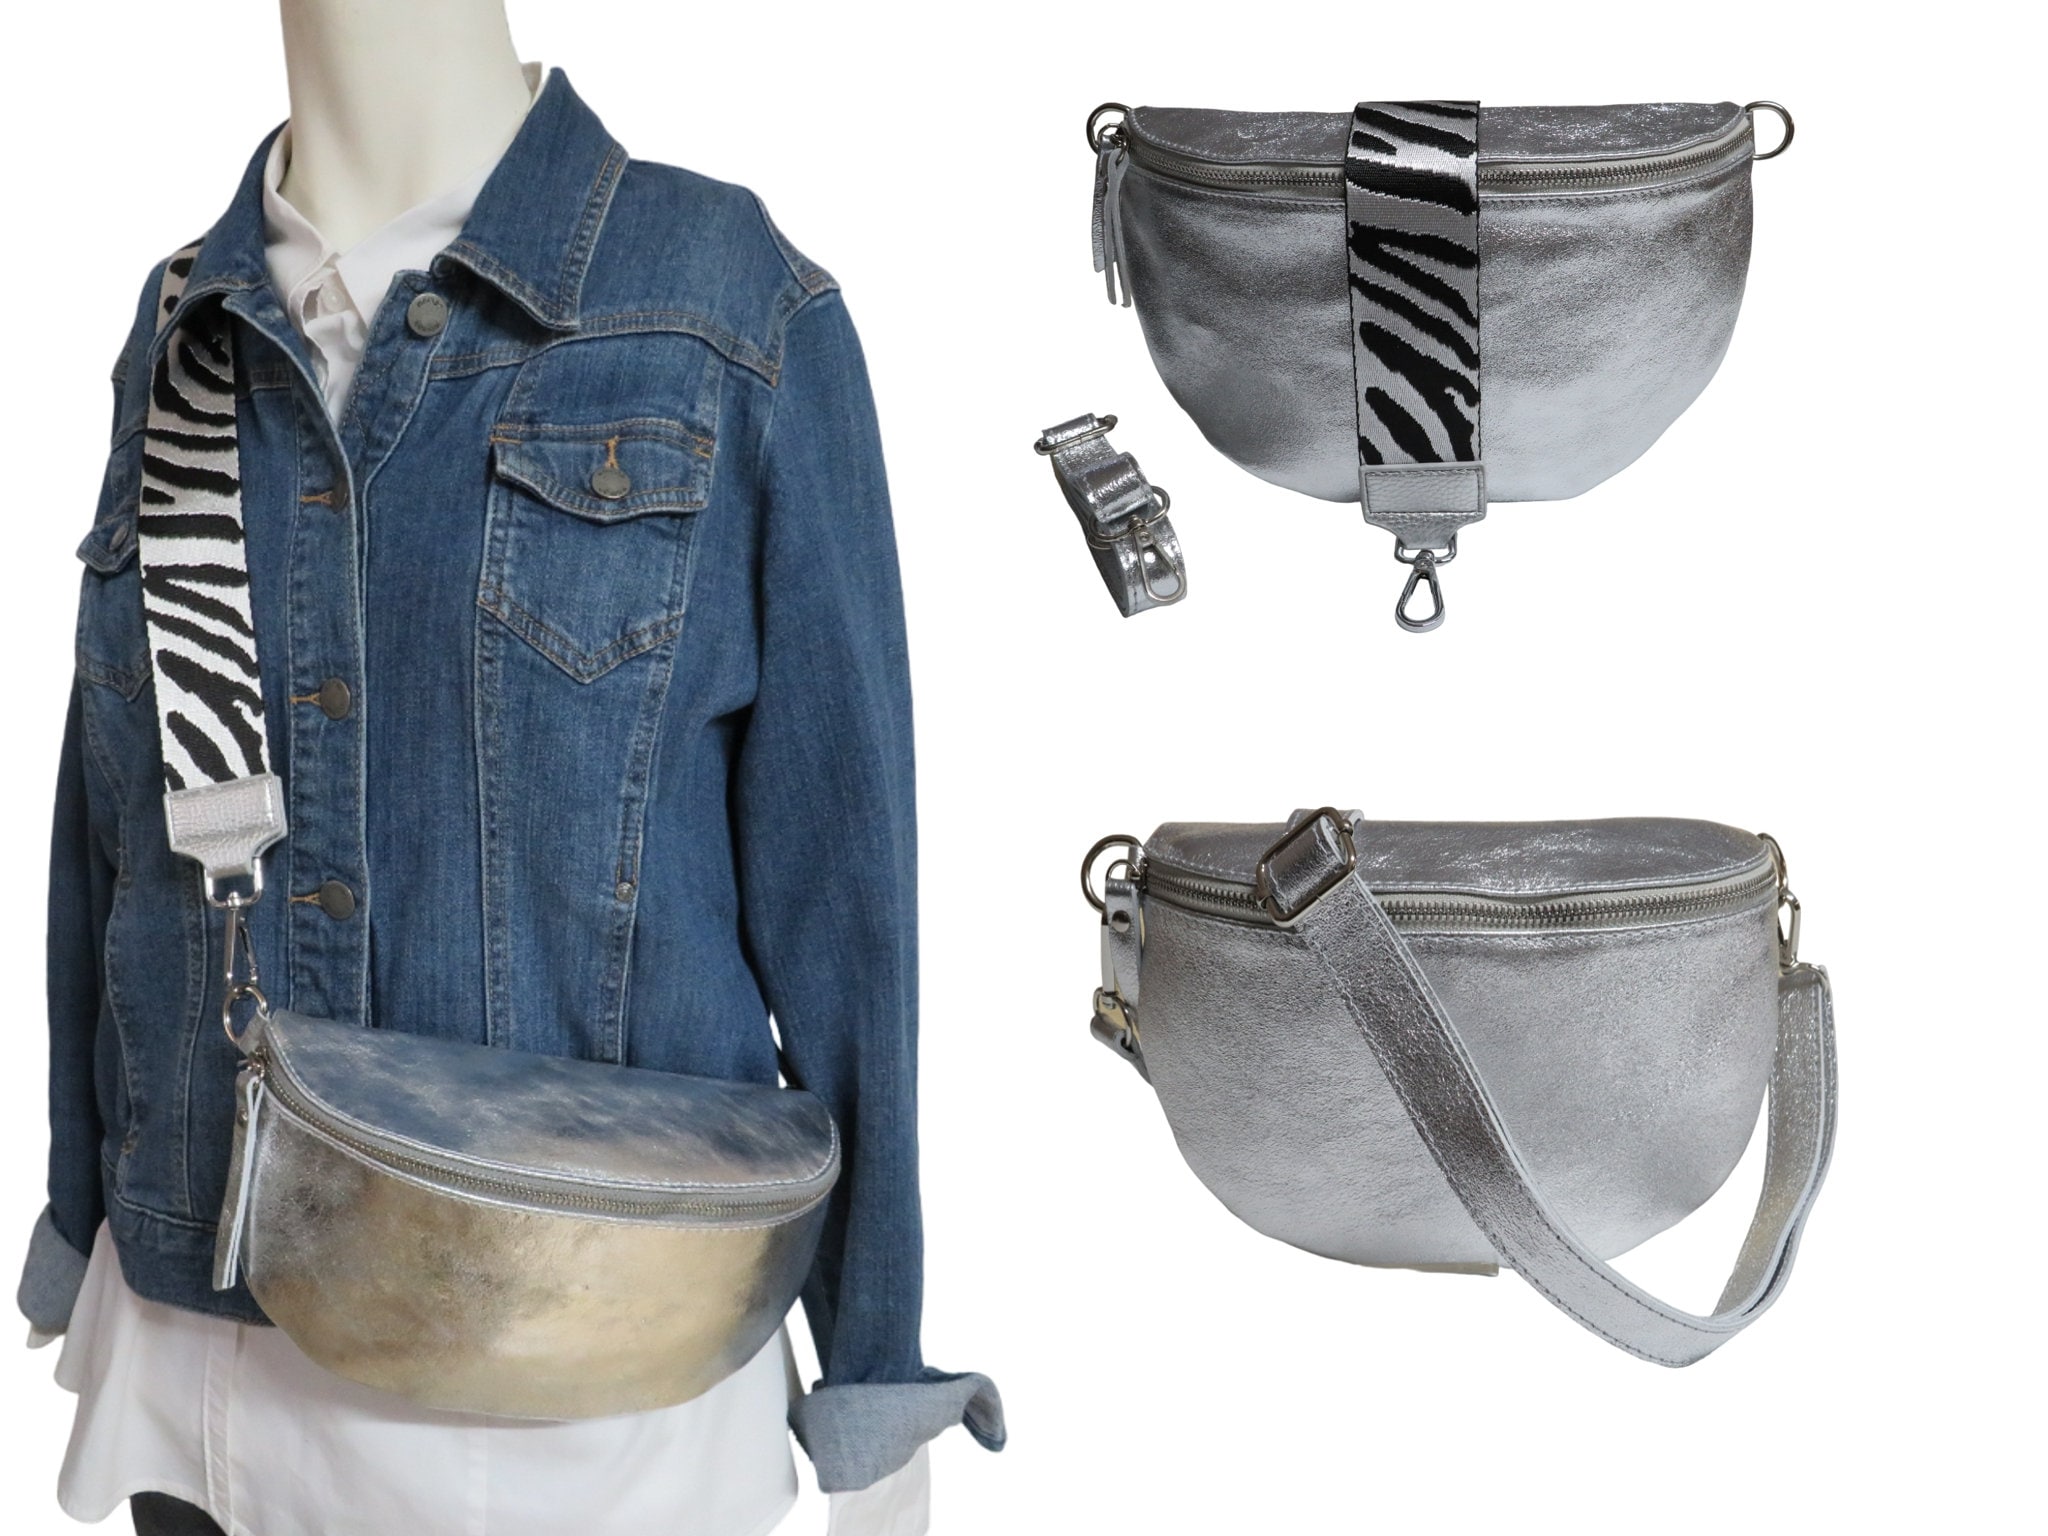 BEIGE Bag With Strap Leather Nappa Leather Shoulder Bag in 3 Sizes  S/meter/xl Crossbody Bag Bag 3-piece SET 